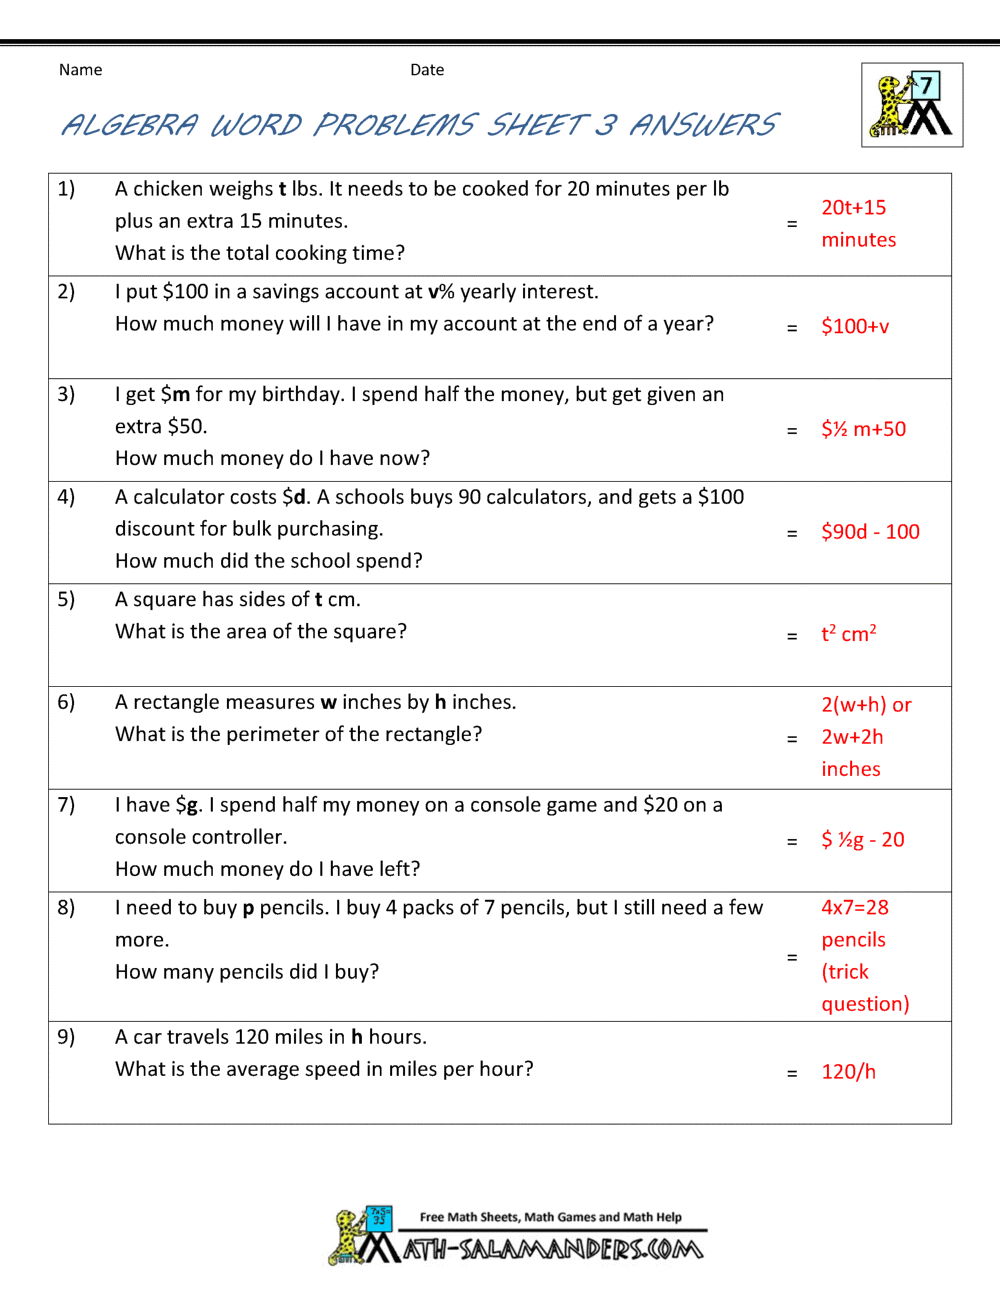 Basic Algebra Worksheets Within Algebra 2 Word Problems Worksheet